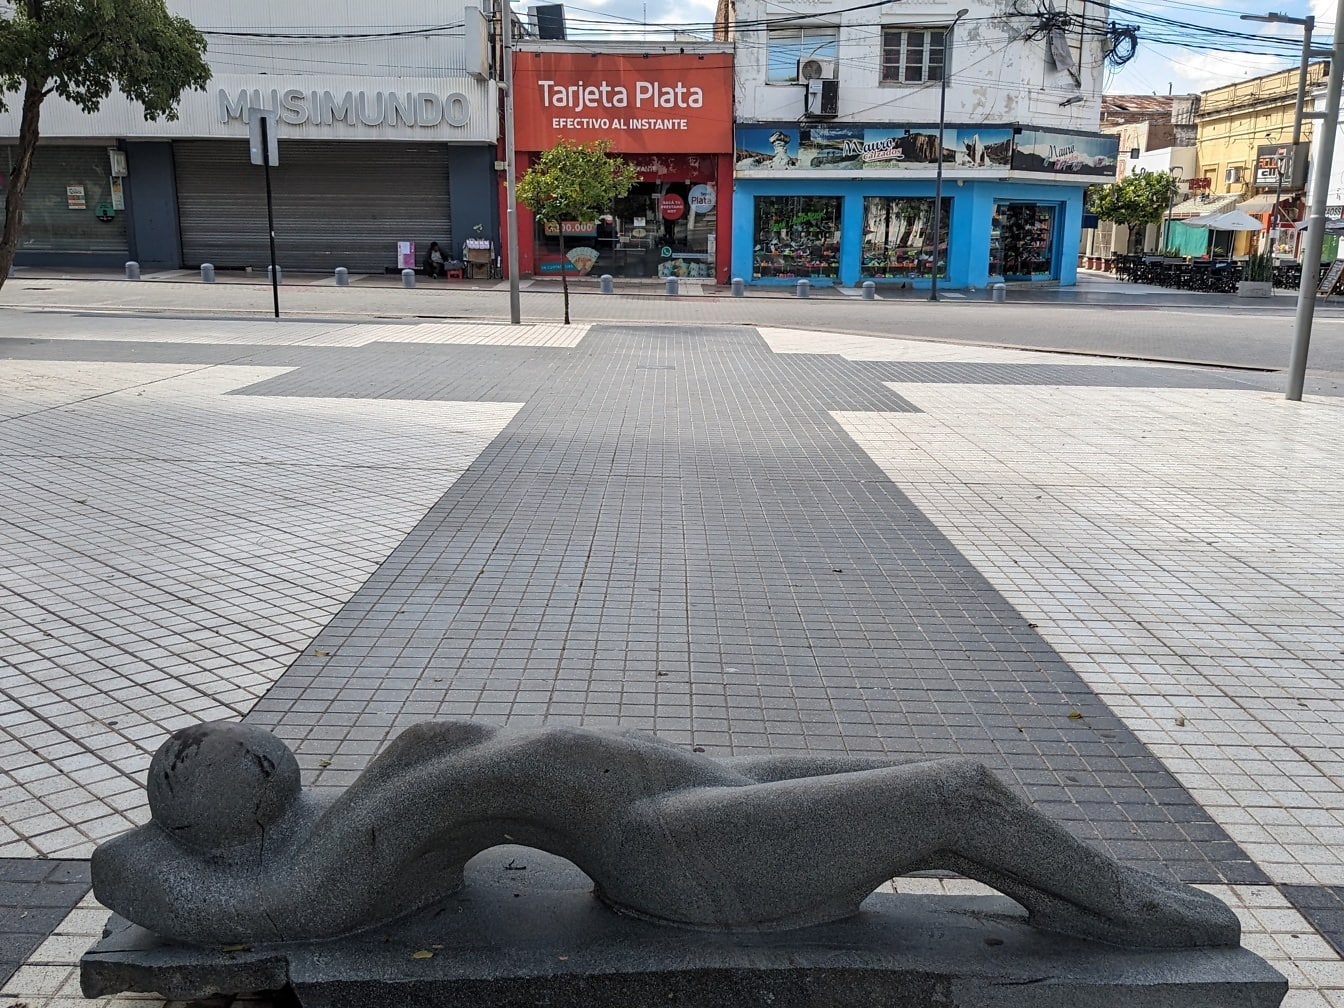 Svart granitstaty av en kvinna som ligger på en trottoar